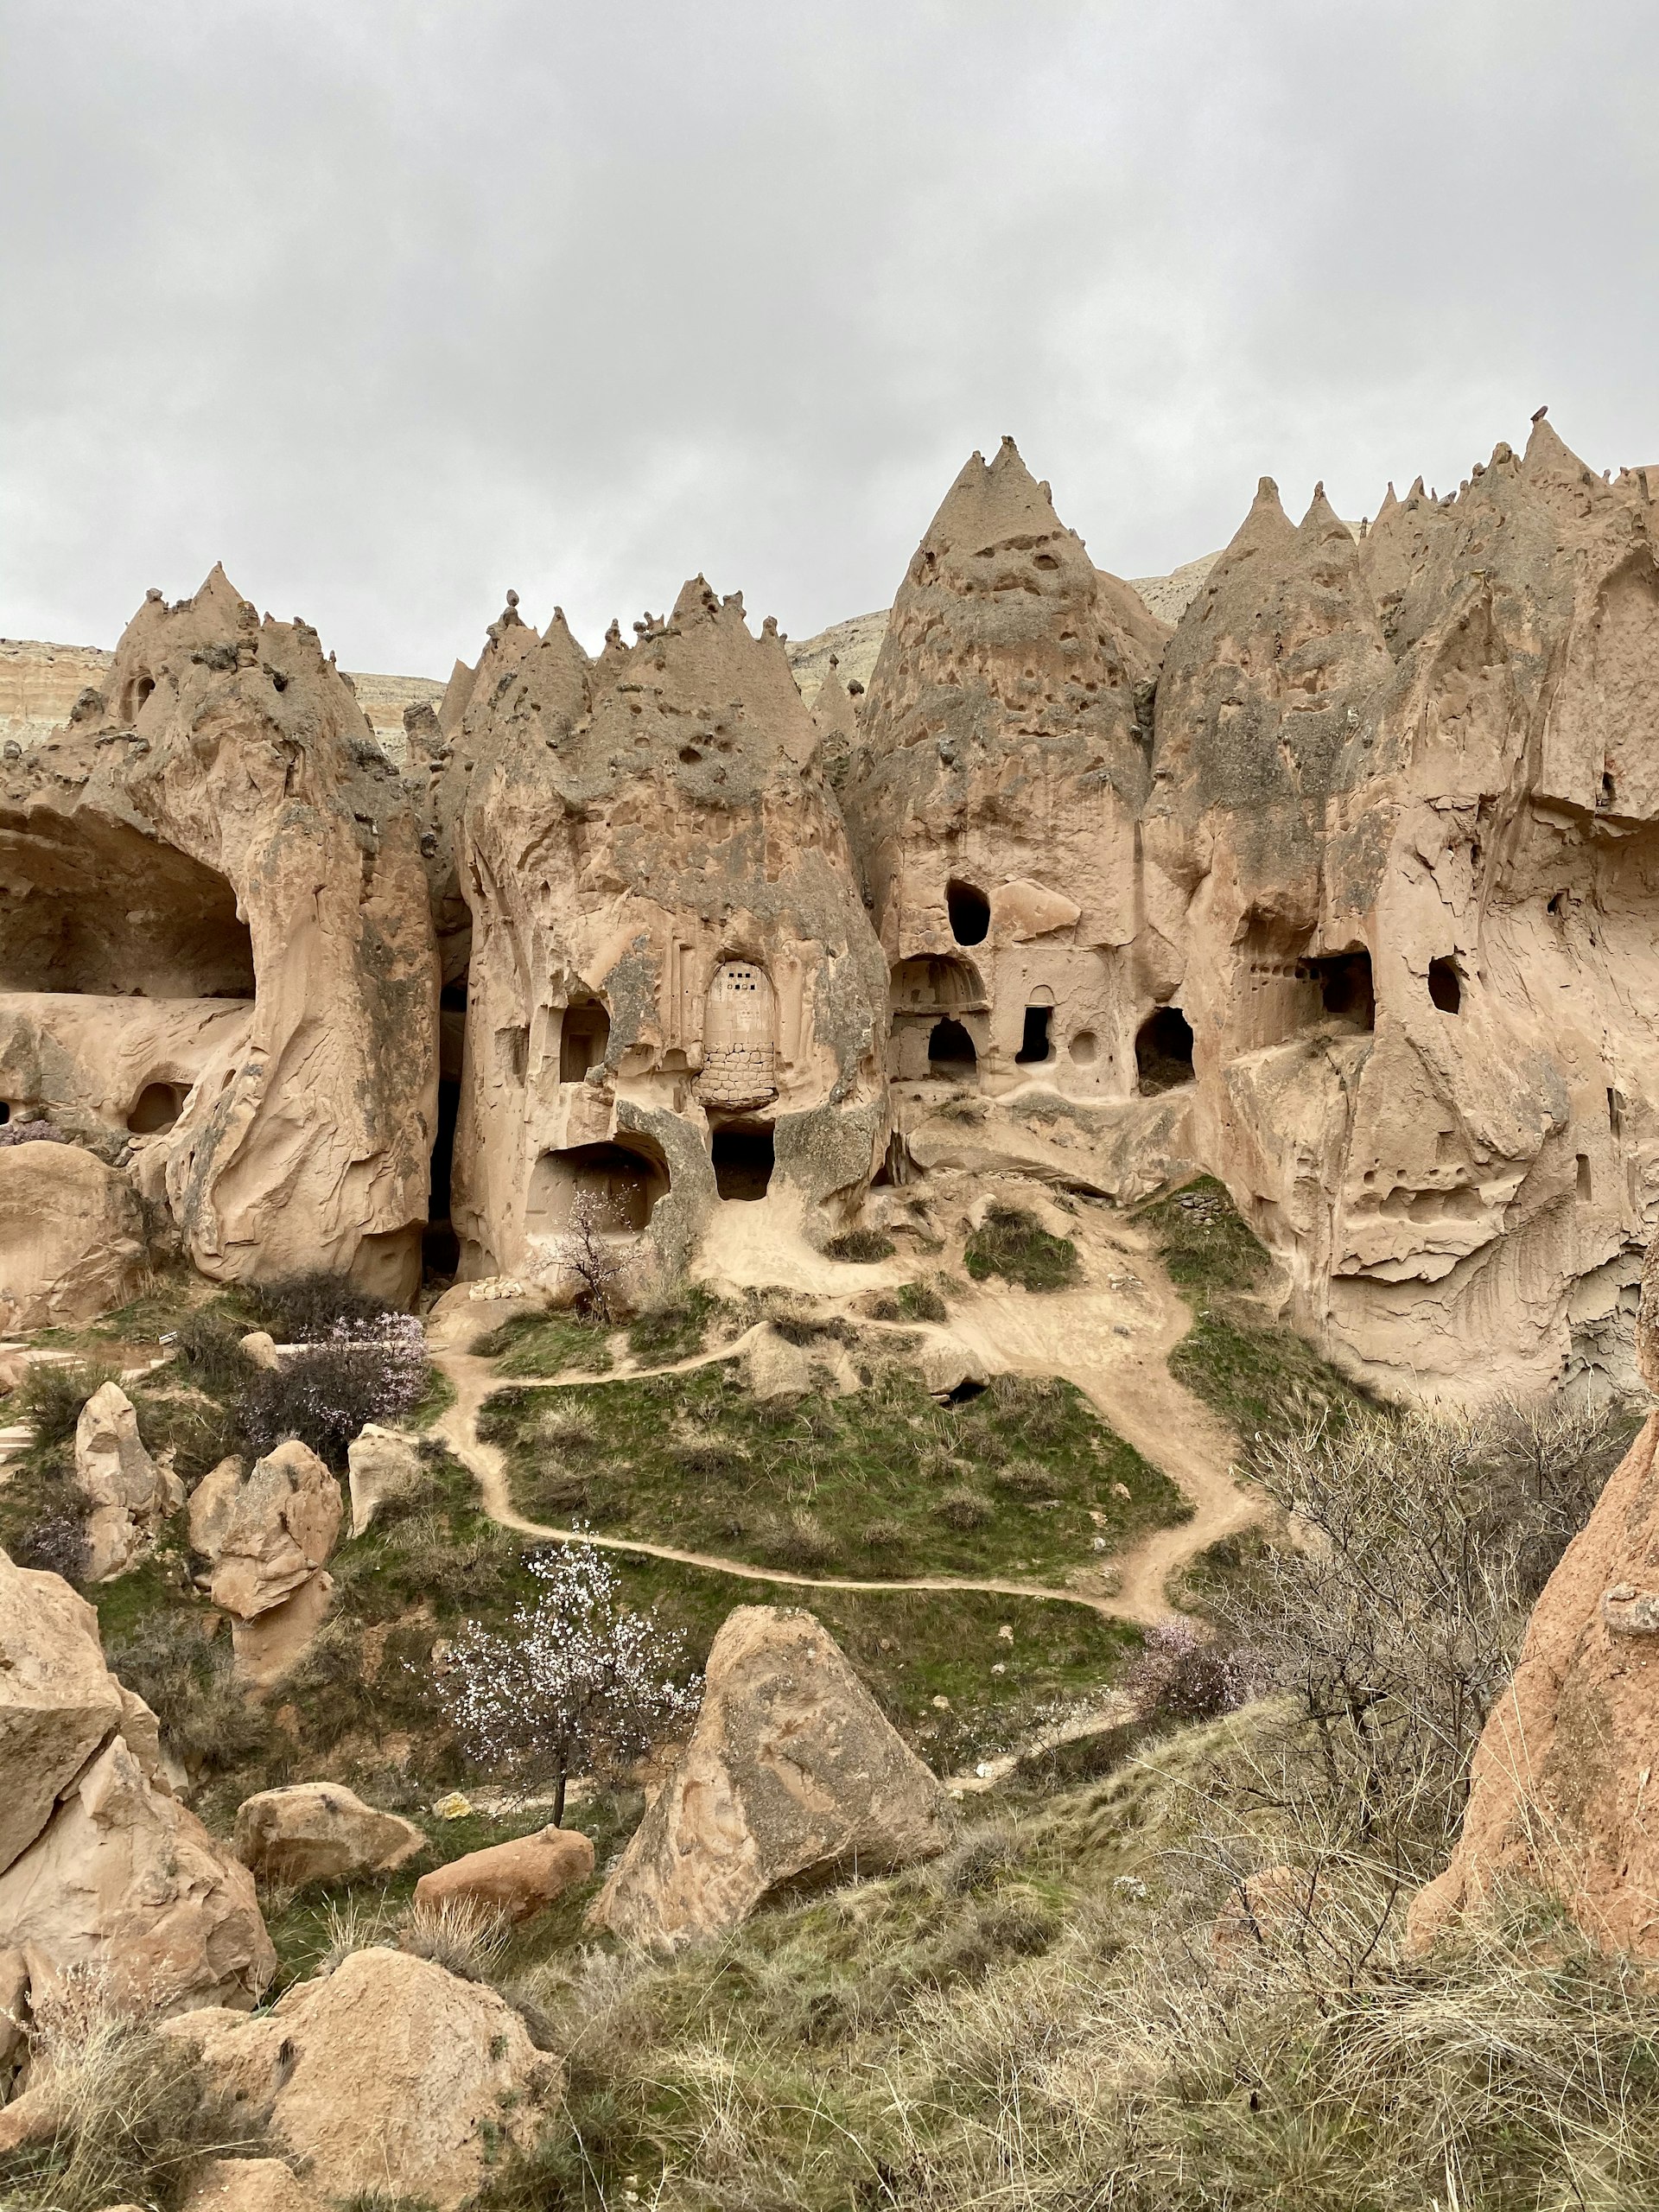 The empty Zelve Monastery at Cappadocia